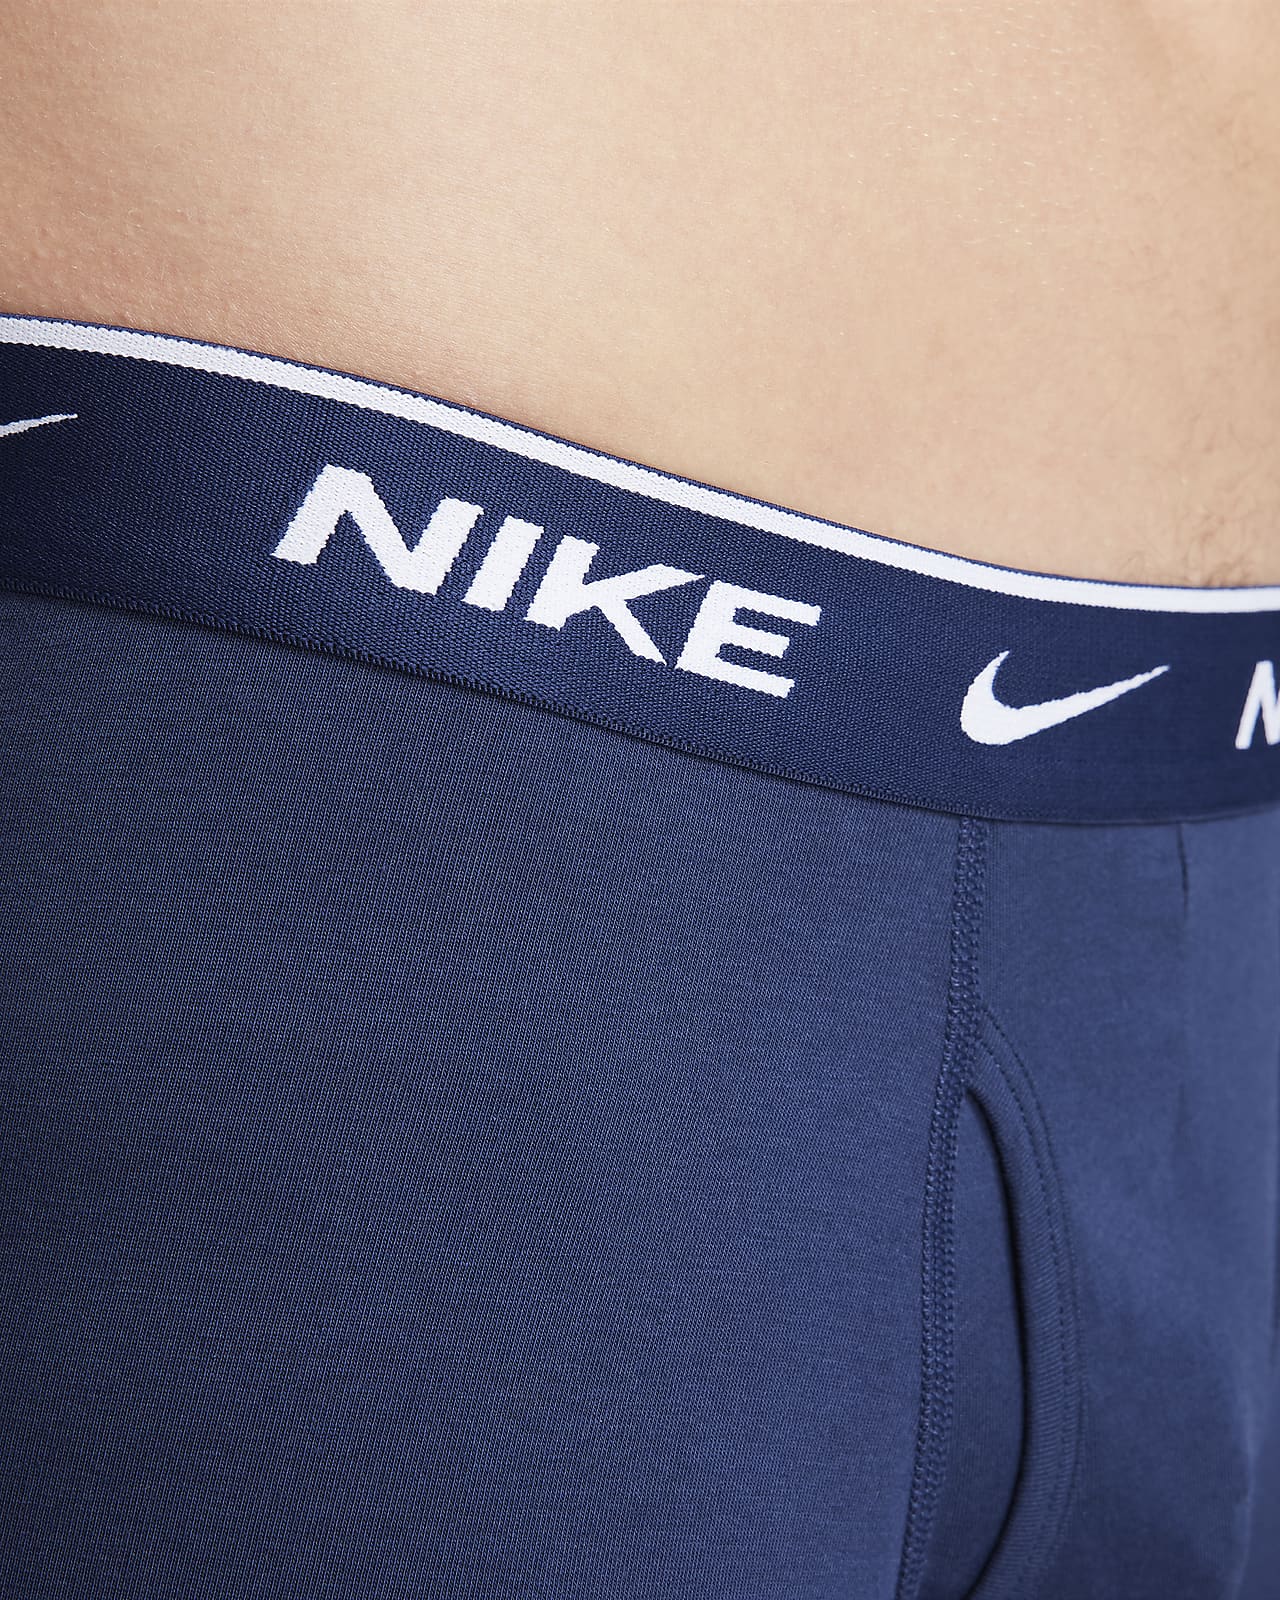 Nike Dri-FIT Essential Cotton Stretch Men\'s Boxer Briefs (3-Pack).